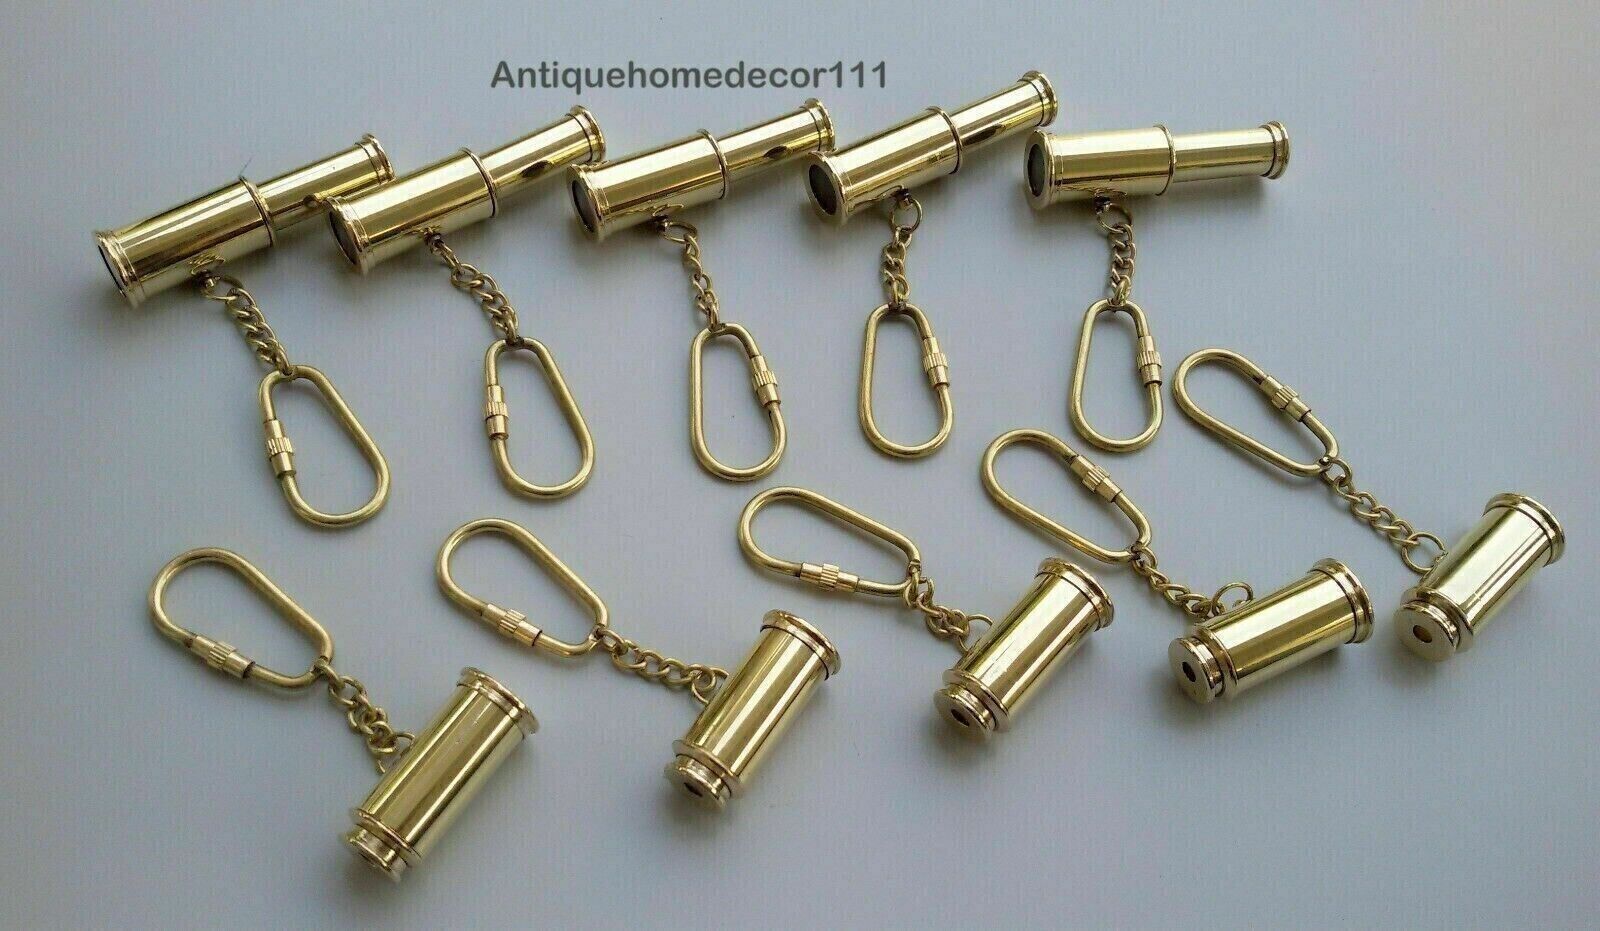 Lot of 50 Pcs Handmade Nautical Brass Antique Telescope Key Chain Key Ring Gift